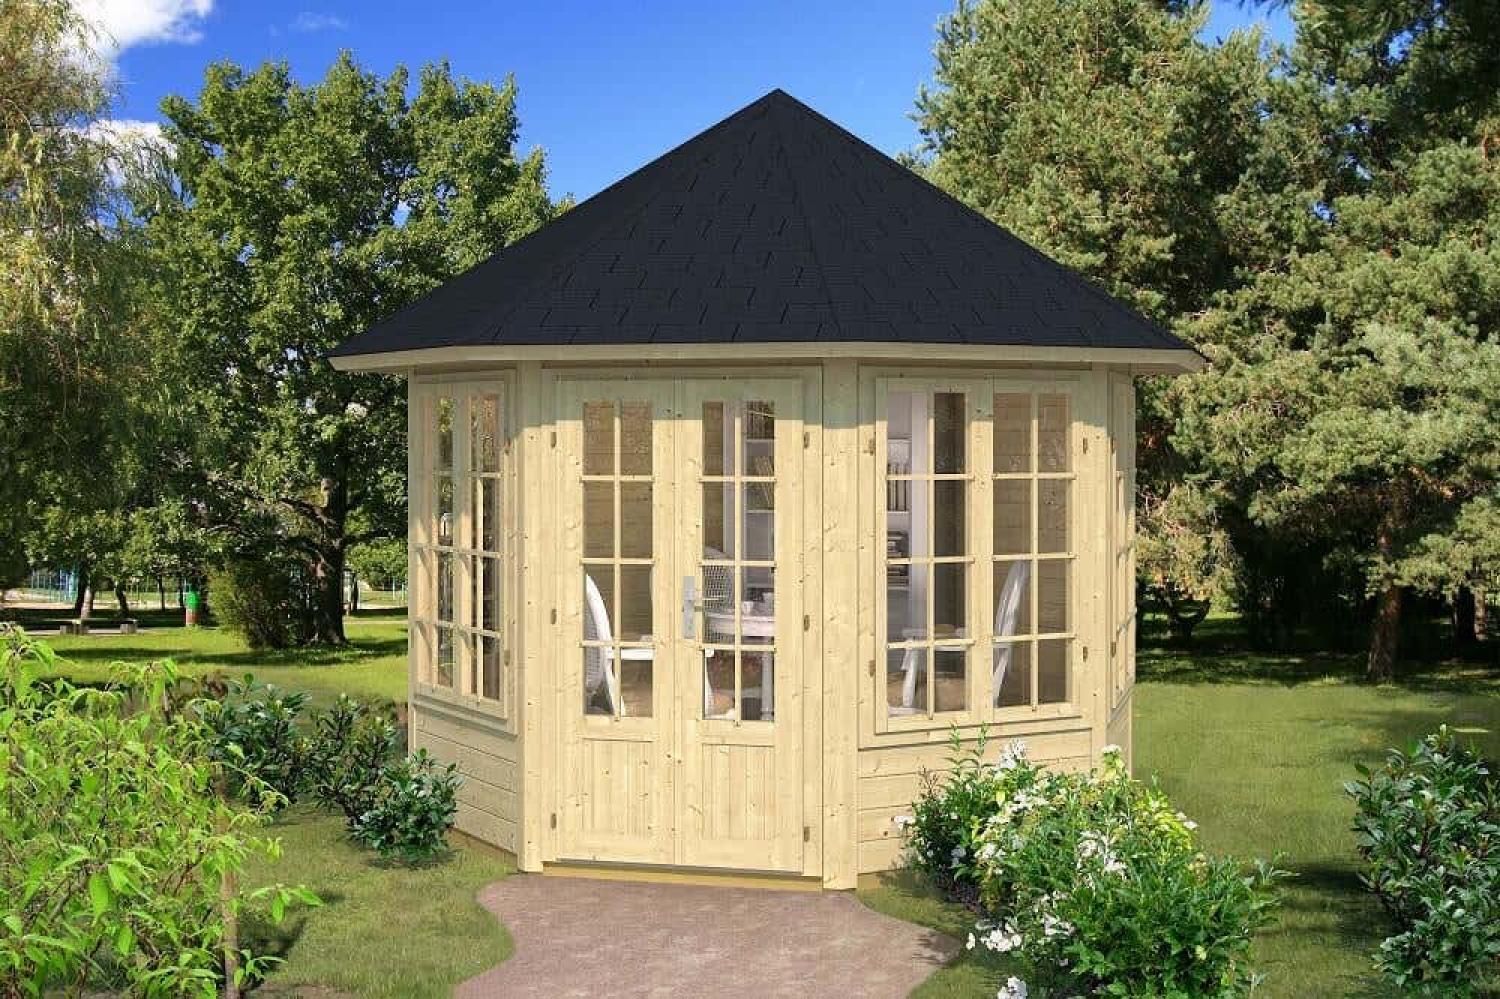 Tenekaubandus Gartenpavillon Modell Louise-40 mit vier Fenstern Gartenpavillon aus Holz Gartenhütte Gartenlaube Bild 1